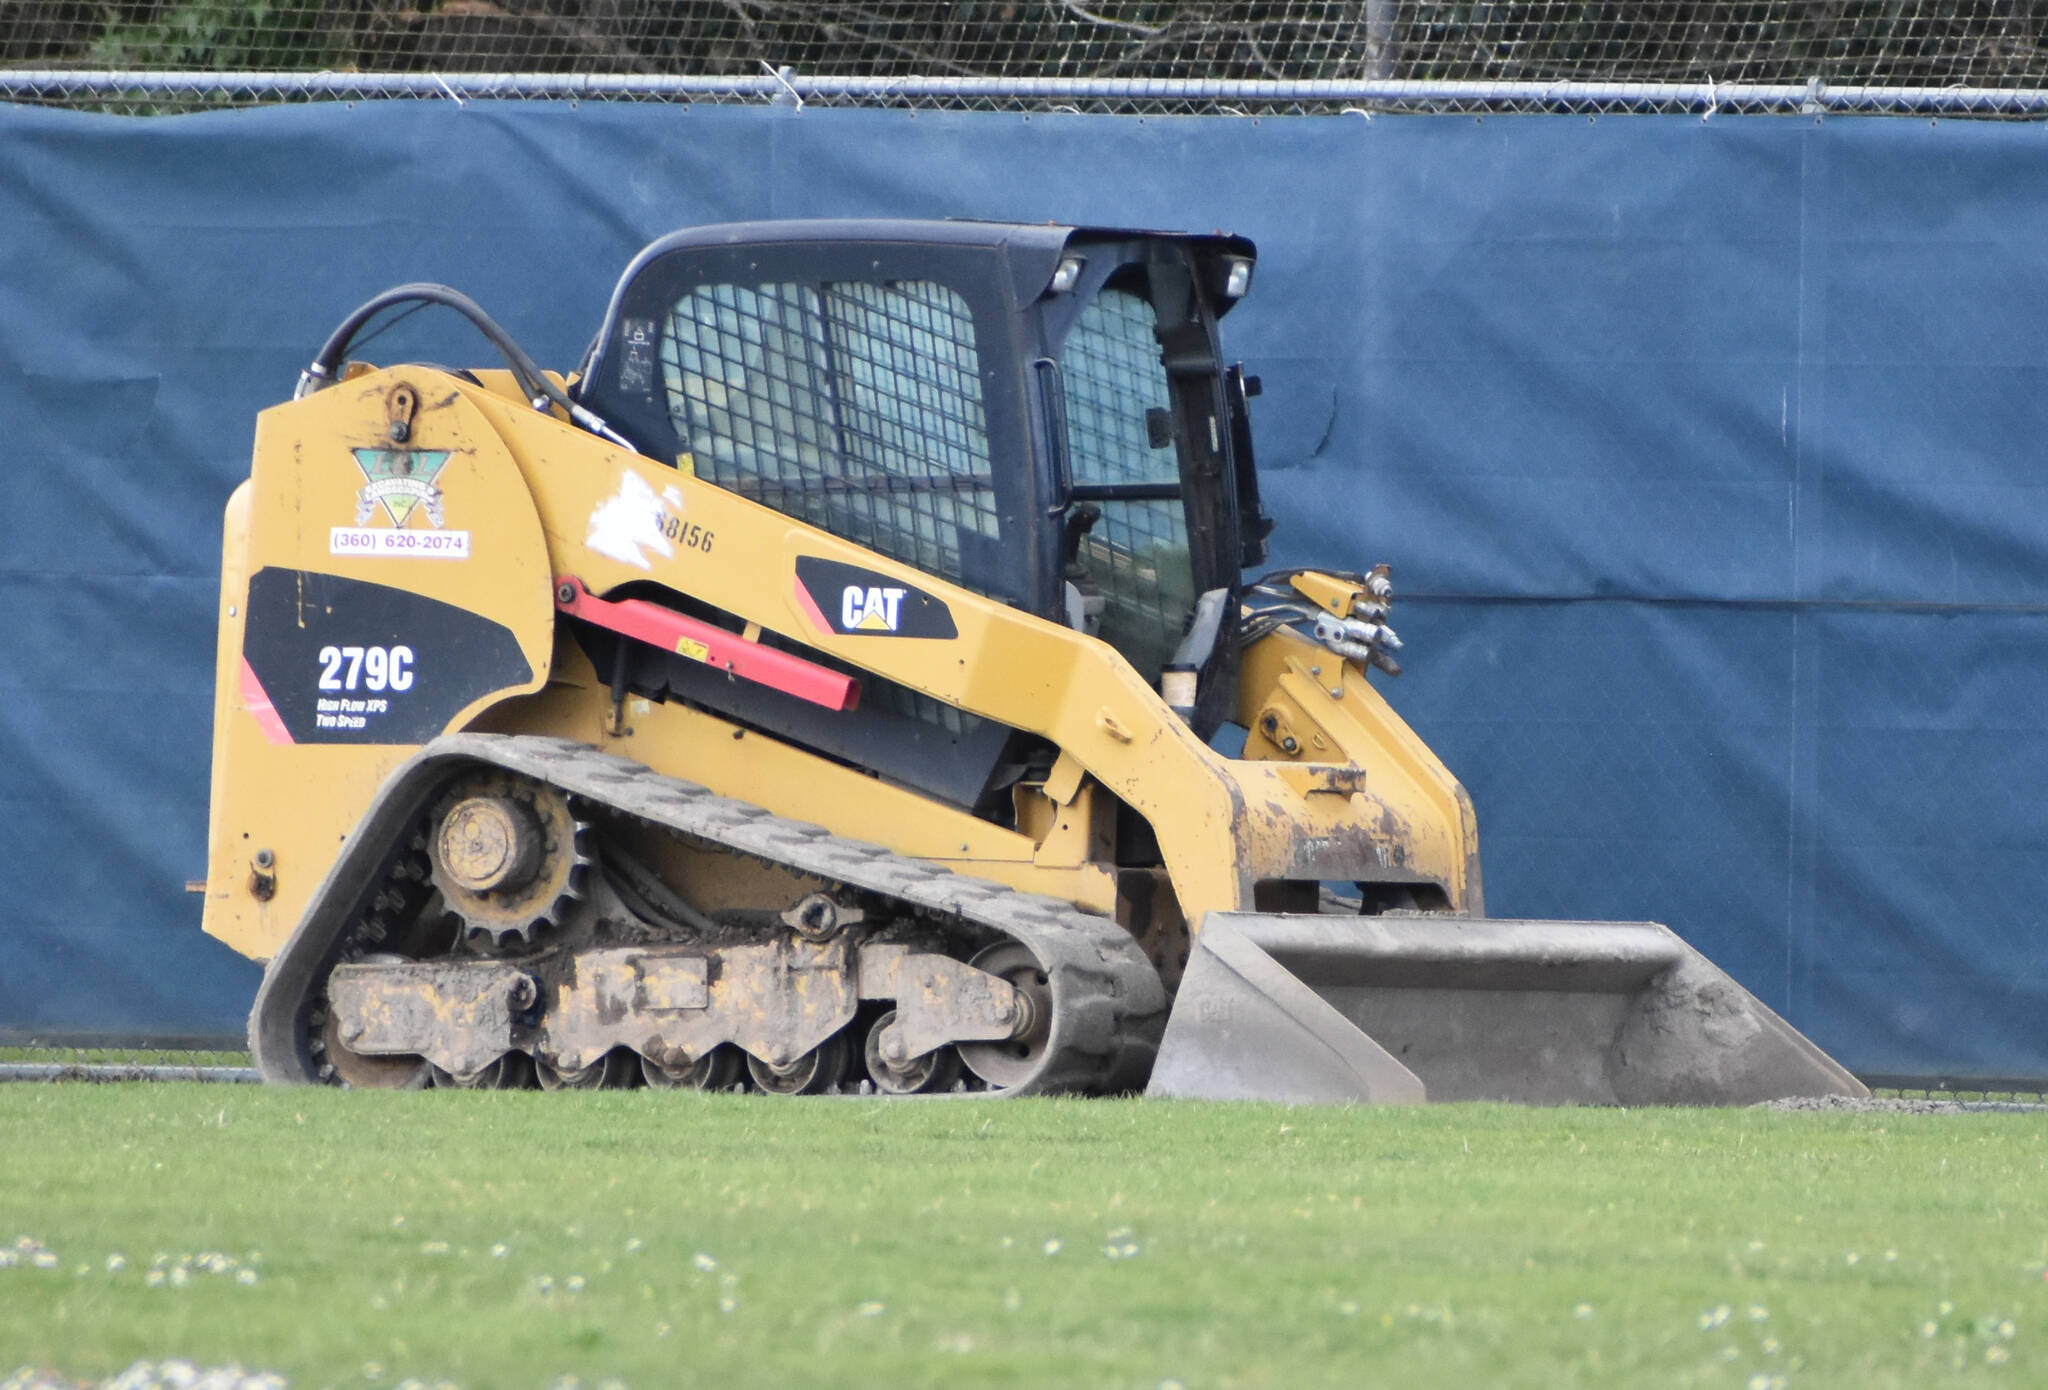 Bainbridge looks to upgrade its field before the season begins.